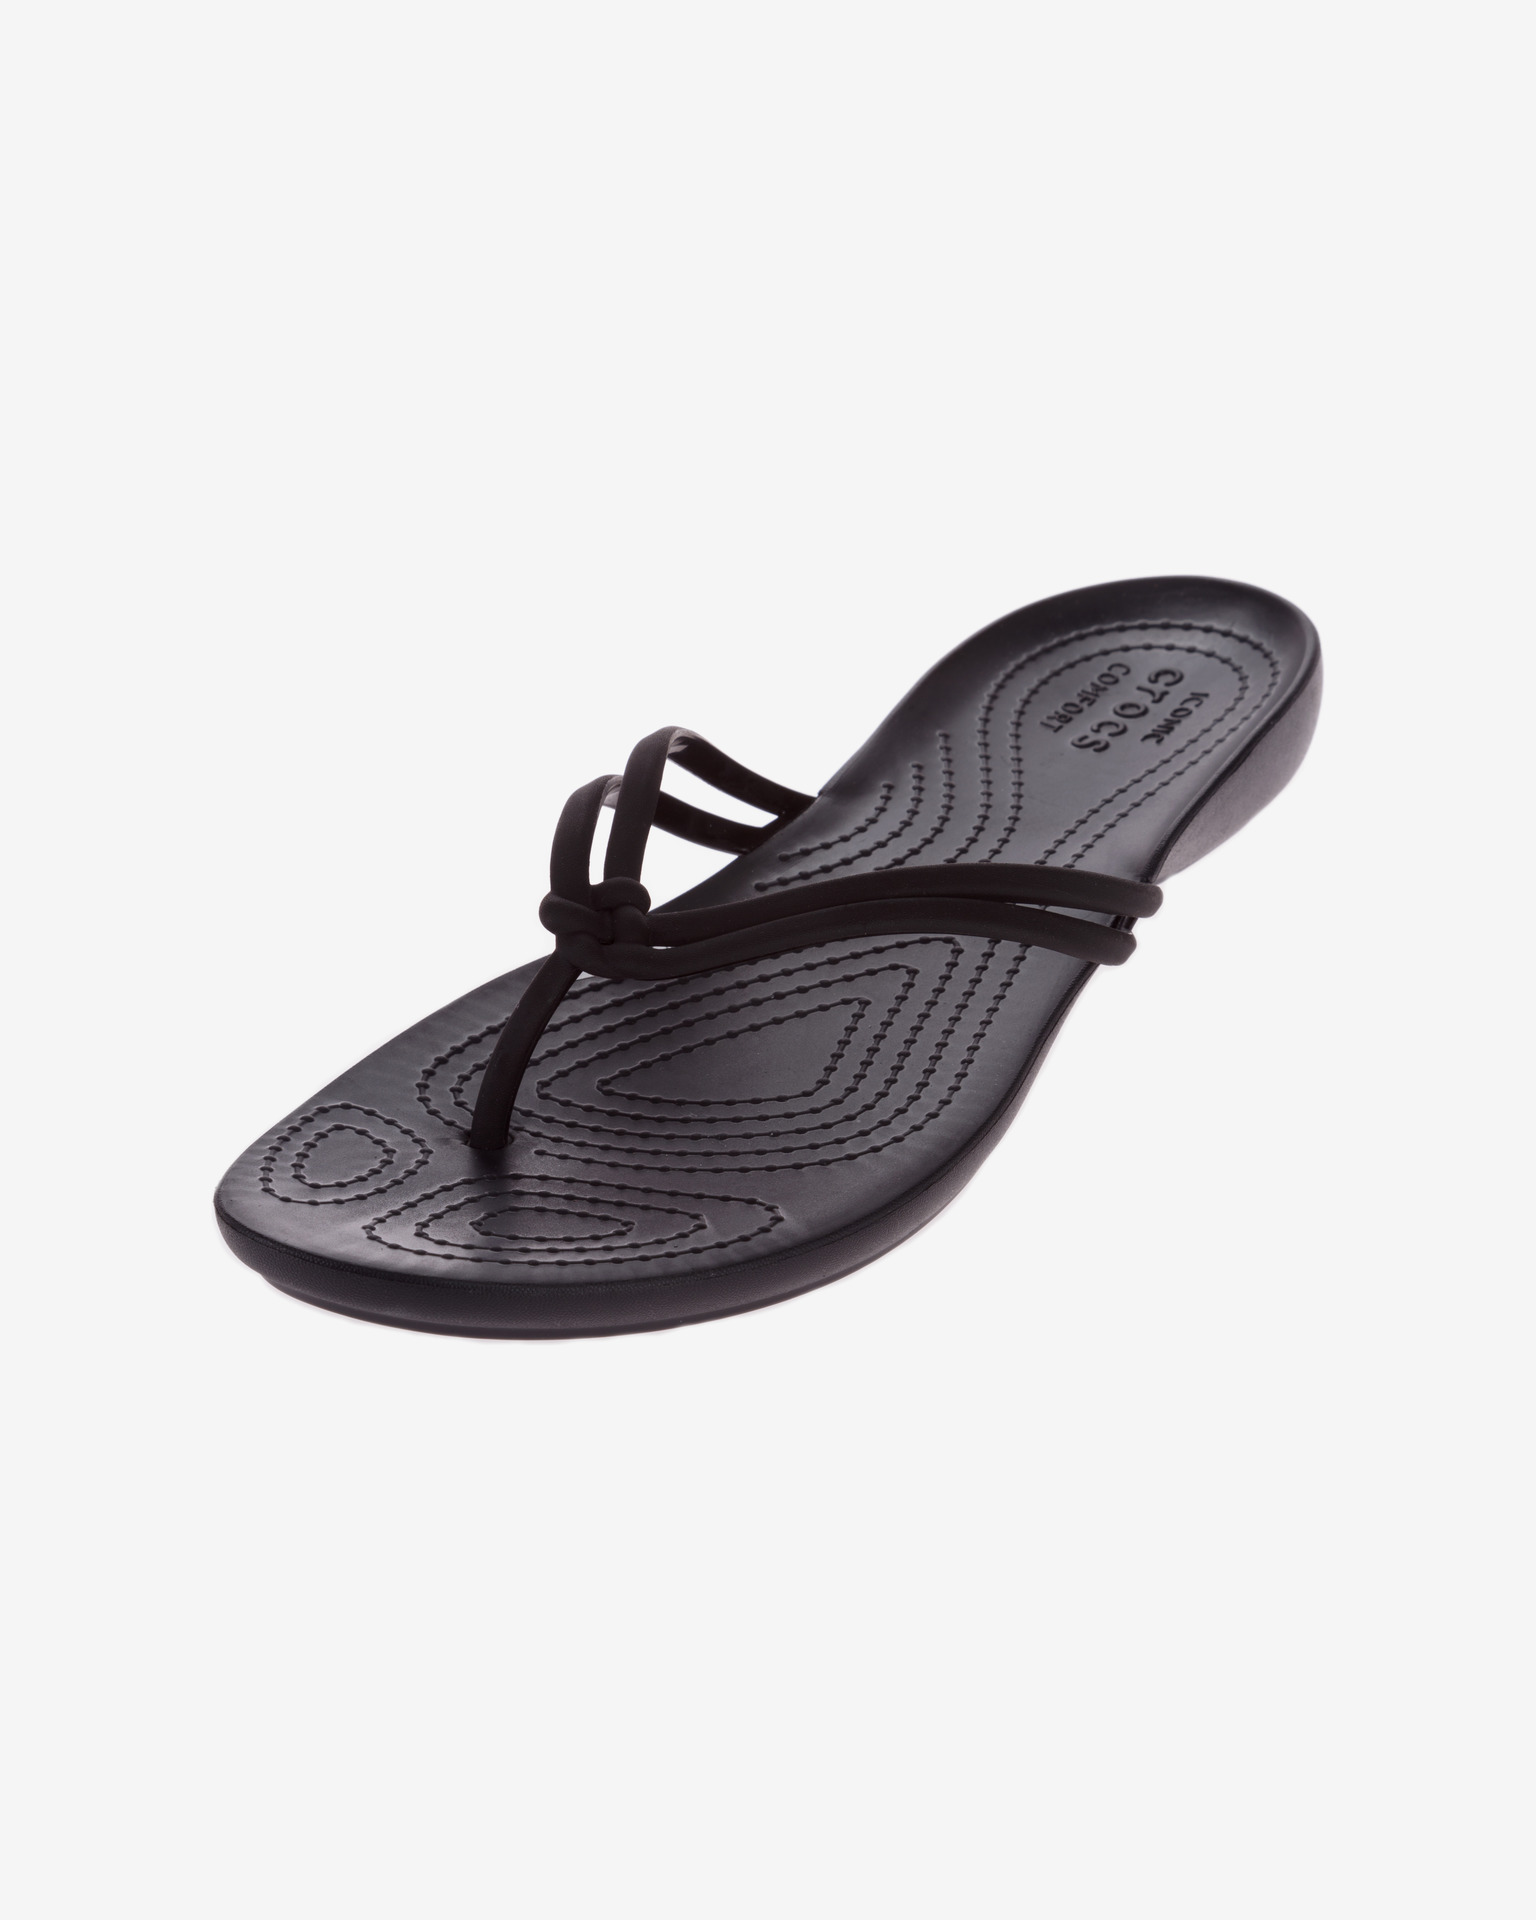 crocs women's isabella flip flop